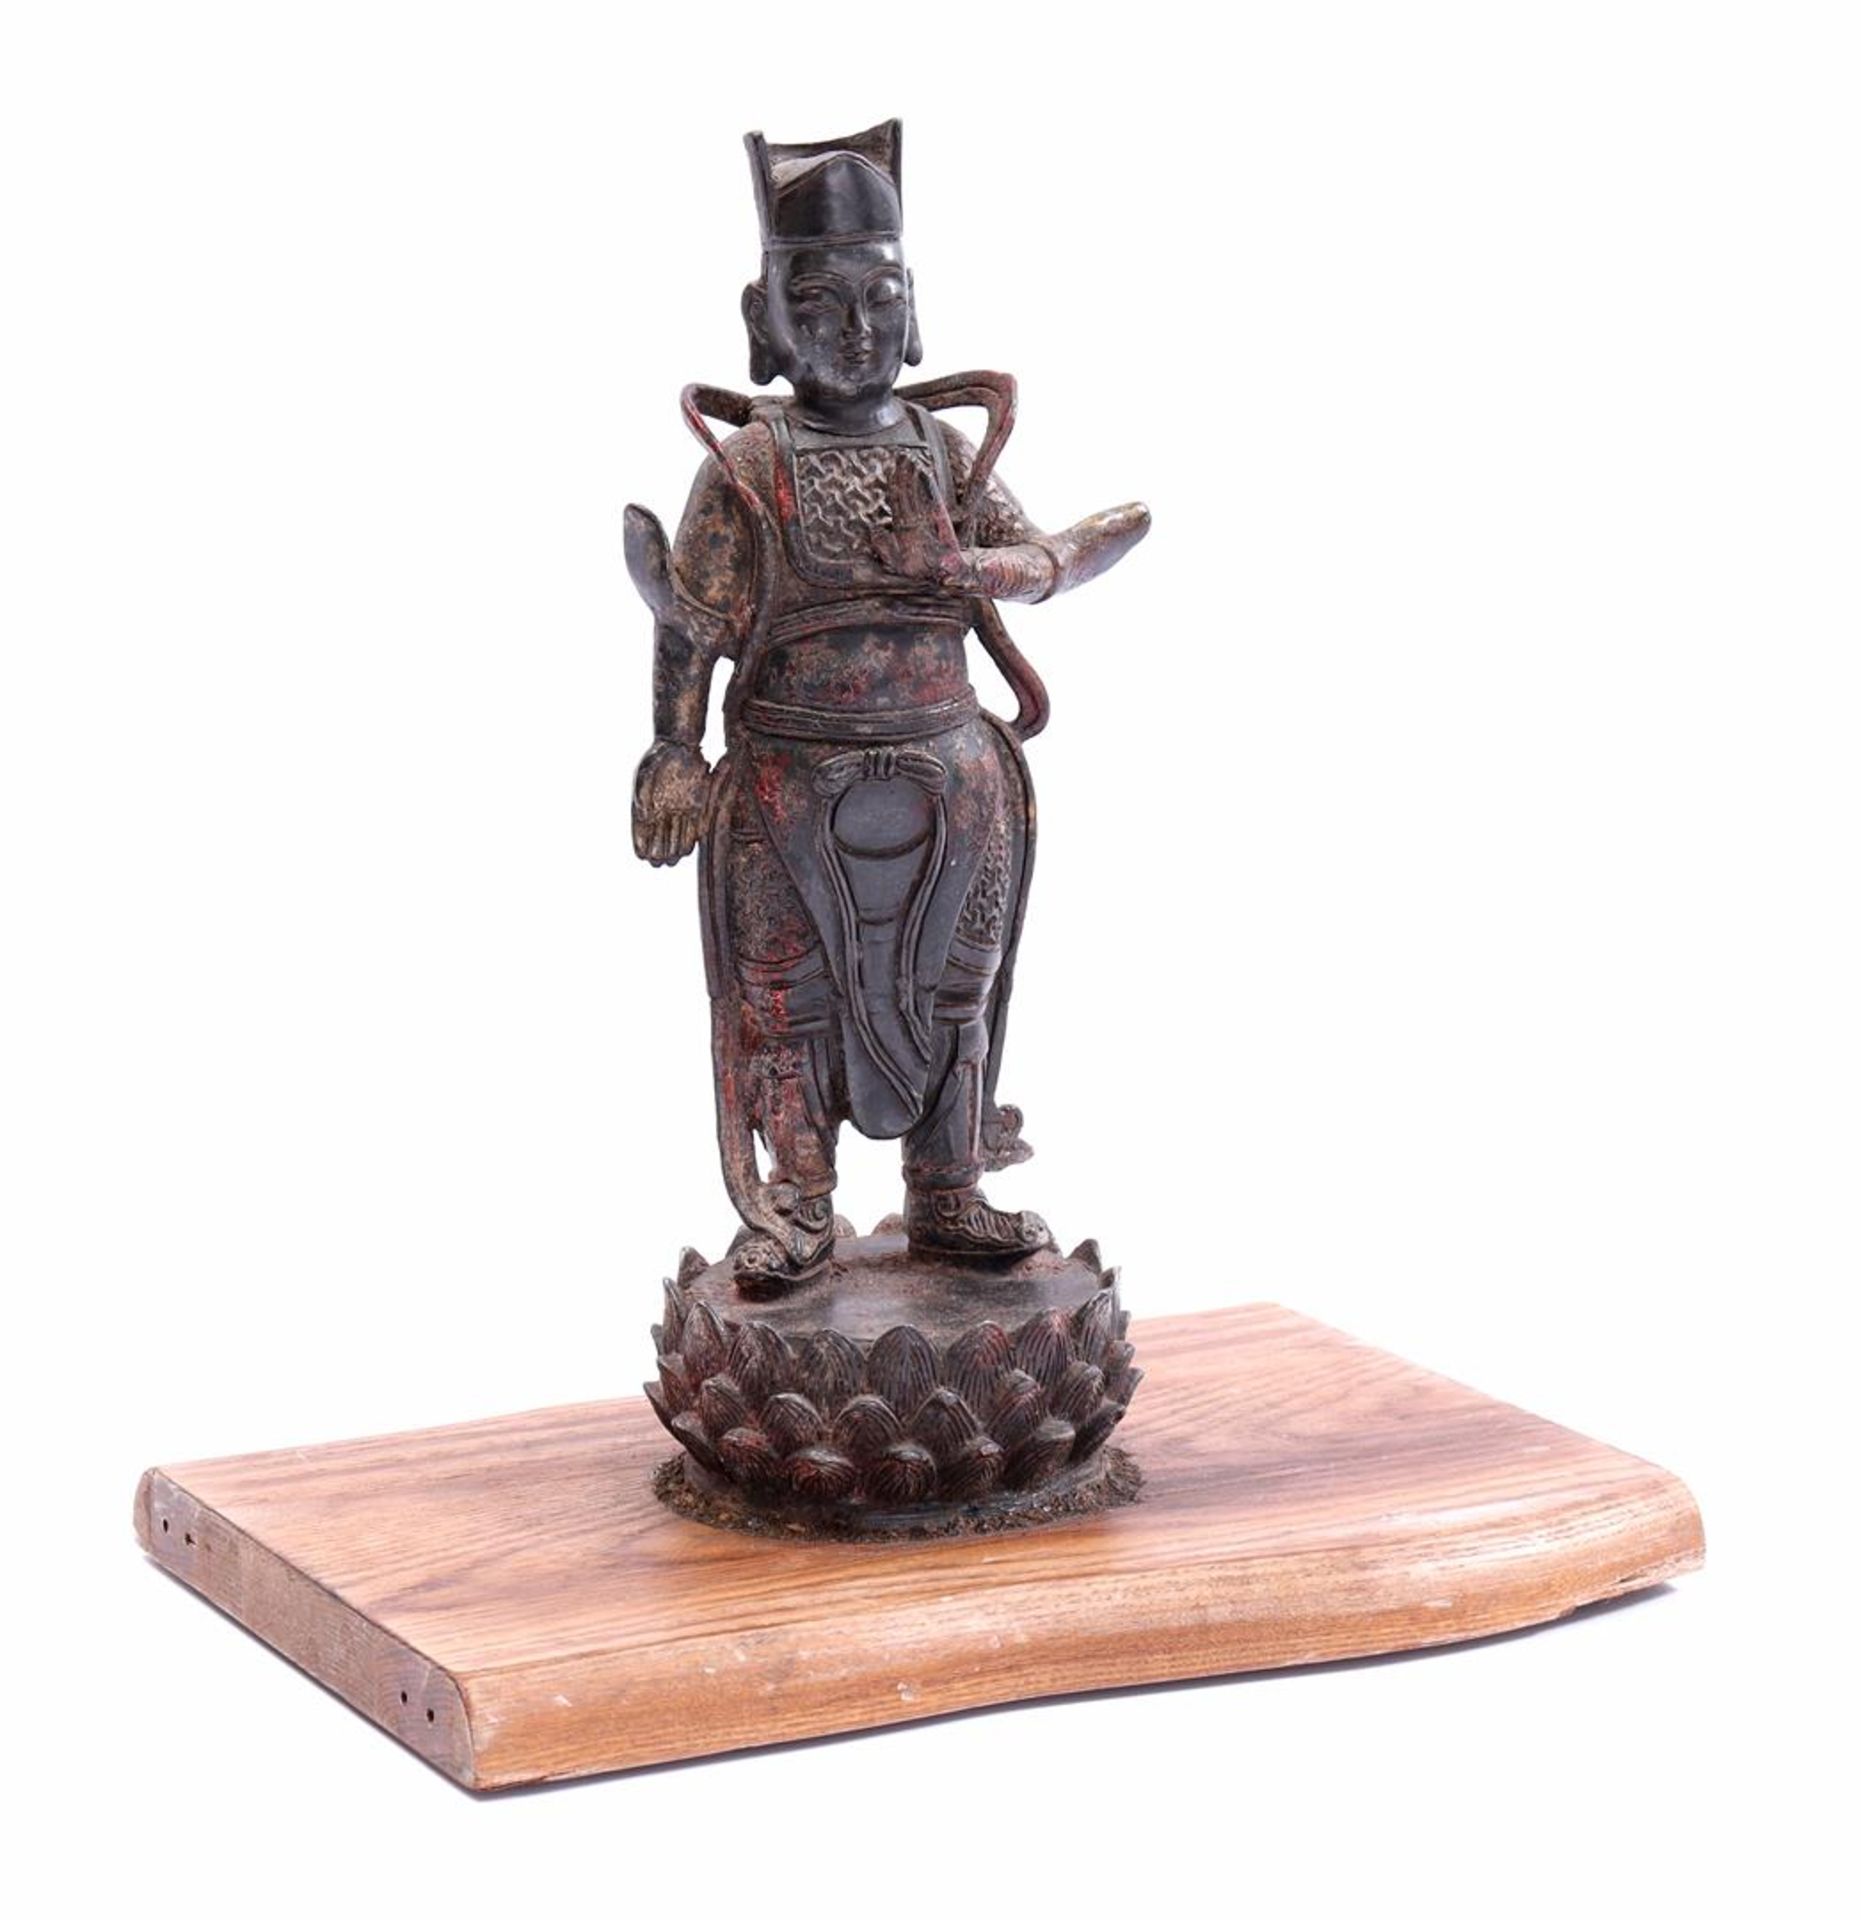 Bronze statue of a Tibetan monk on a wooden plateau